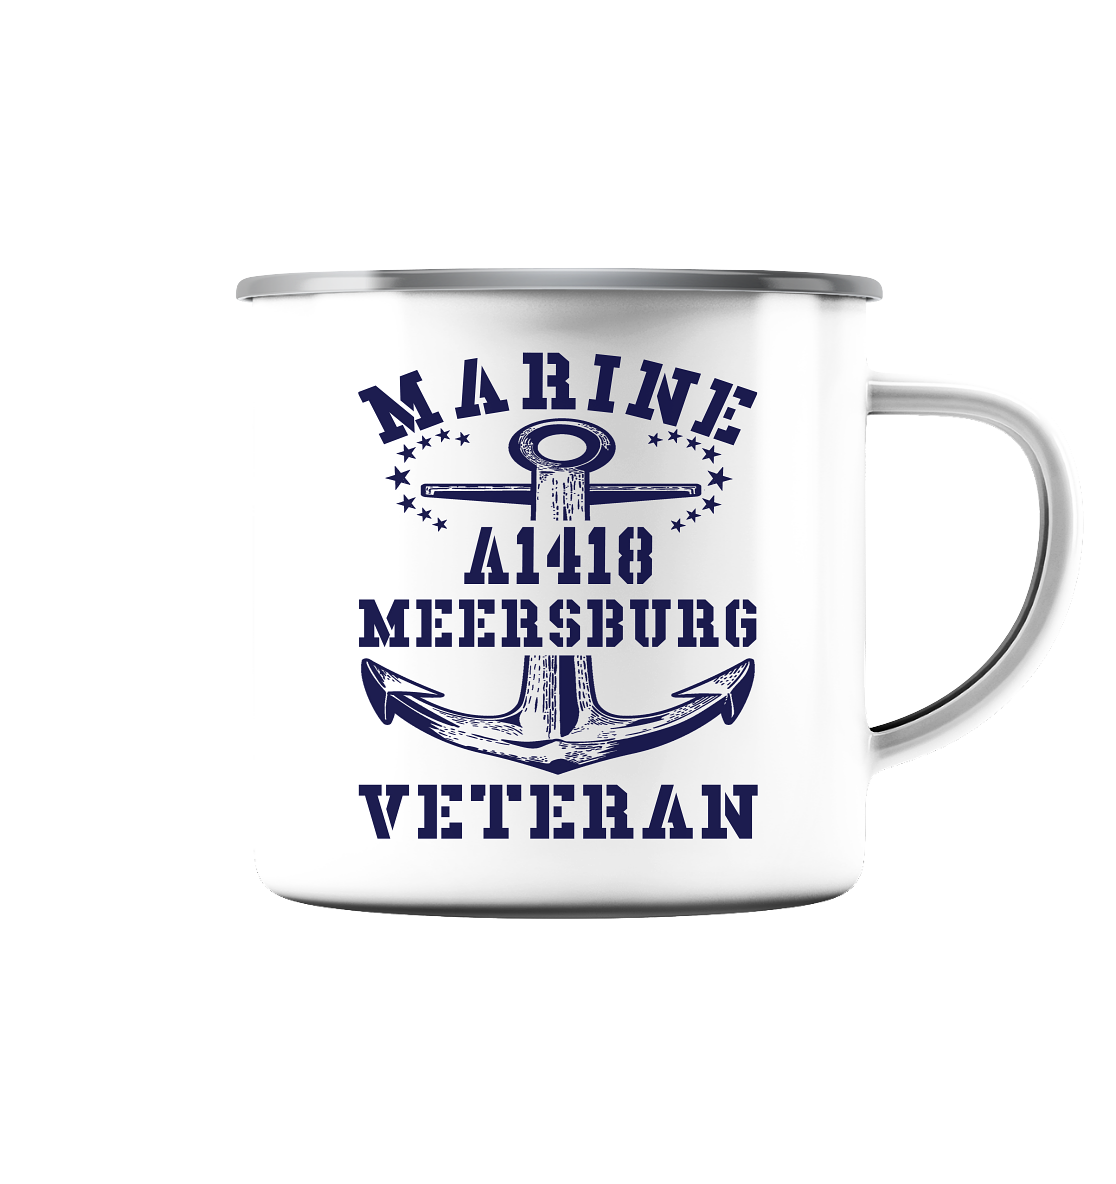 Troßschiff A1418 MEERSBURG Marine Veteran - Emaille Tasse (Silber)